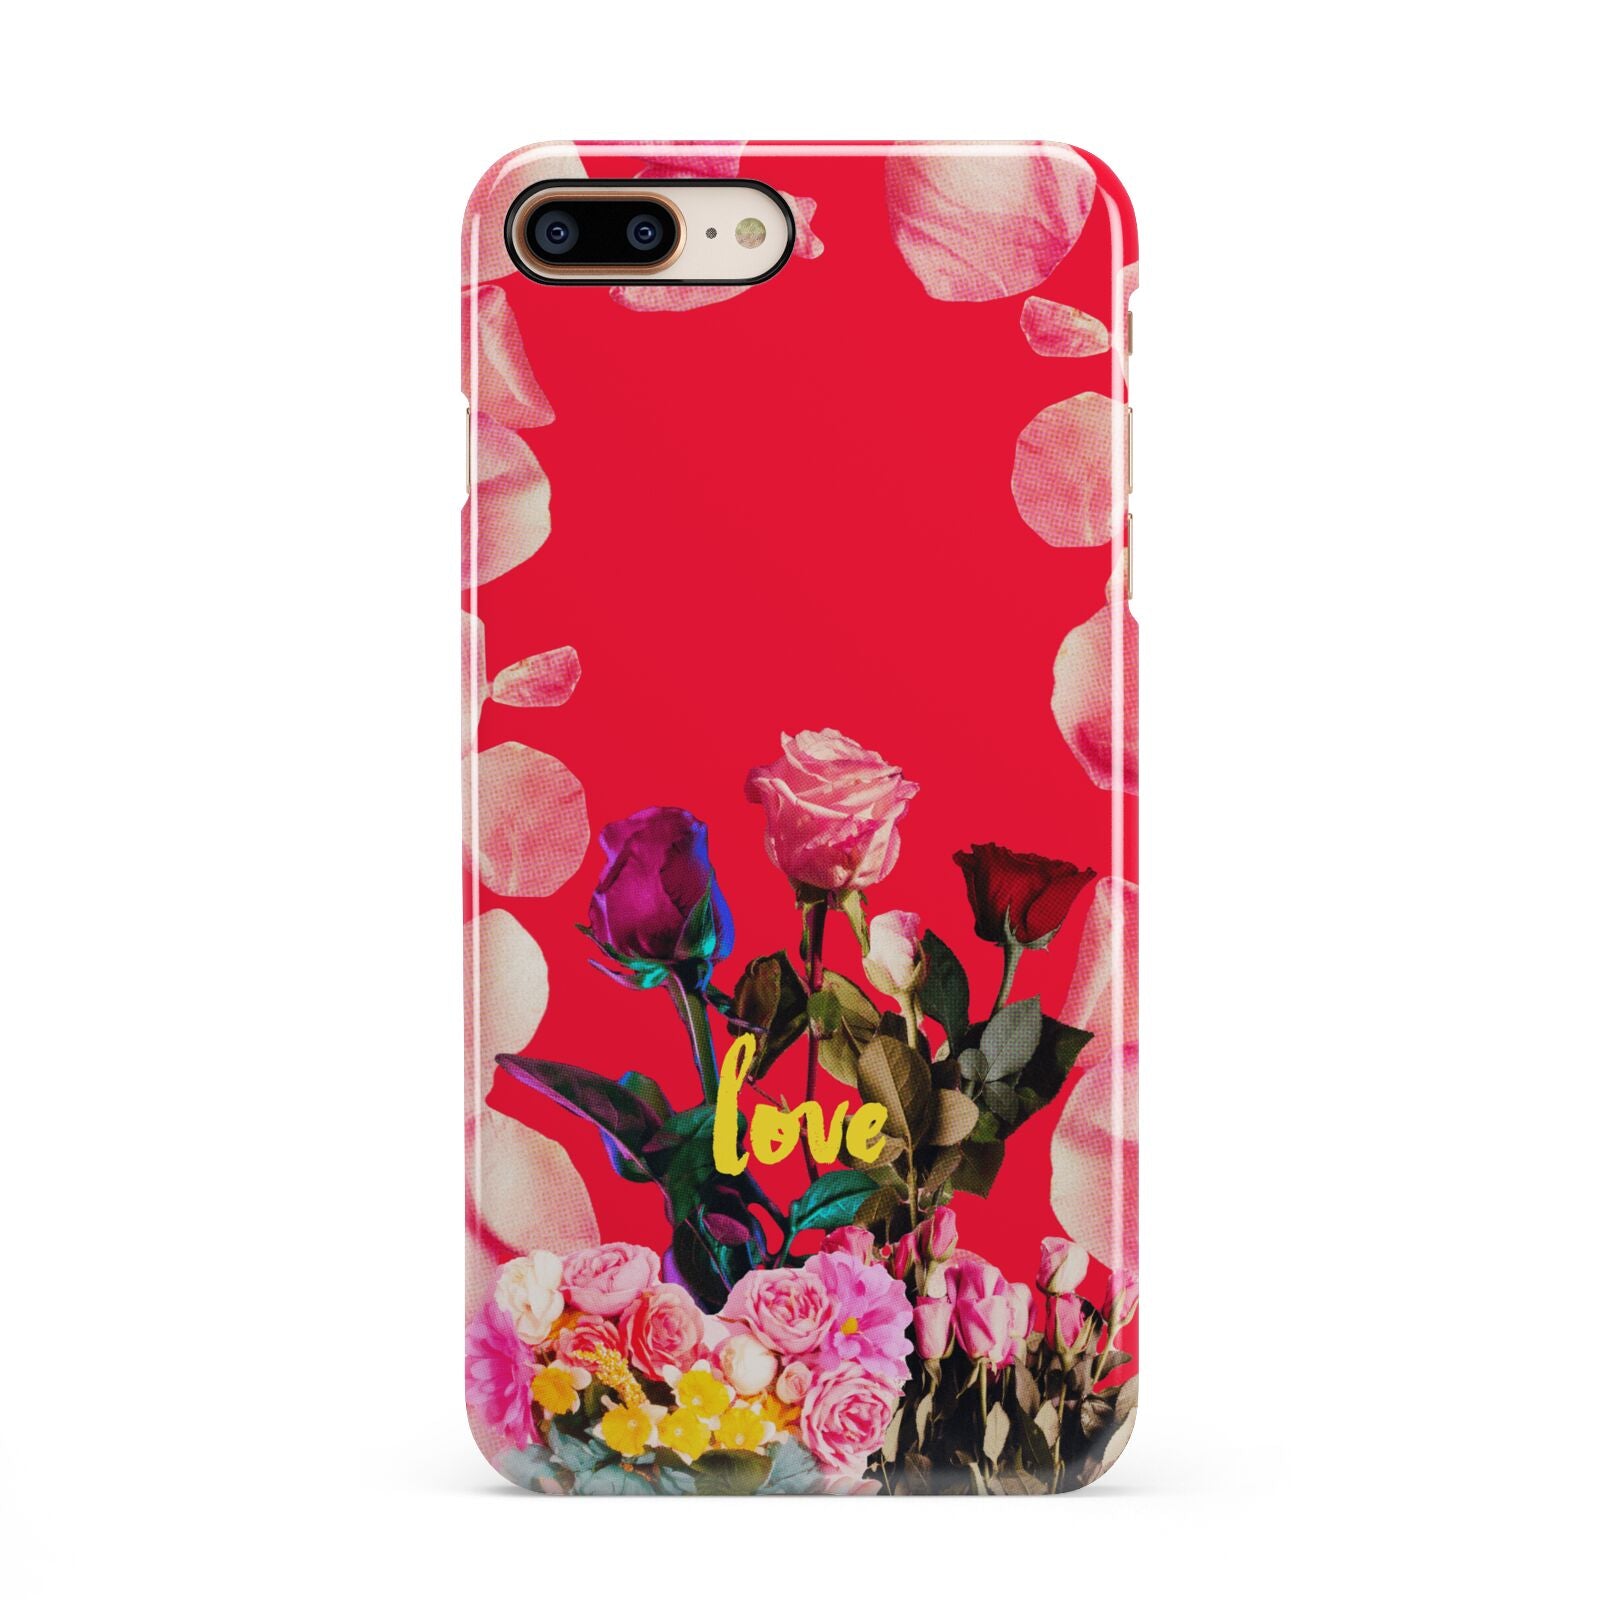 Retro Floral Valentine iPhone 8 Plus 3D Snap Case on Gold Phone